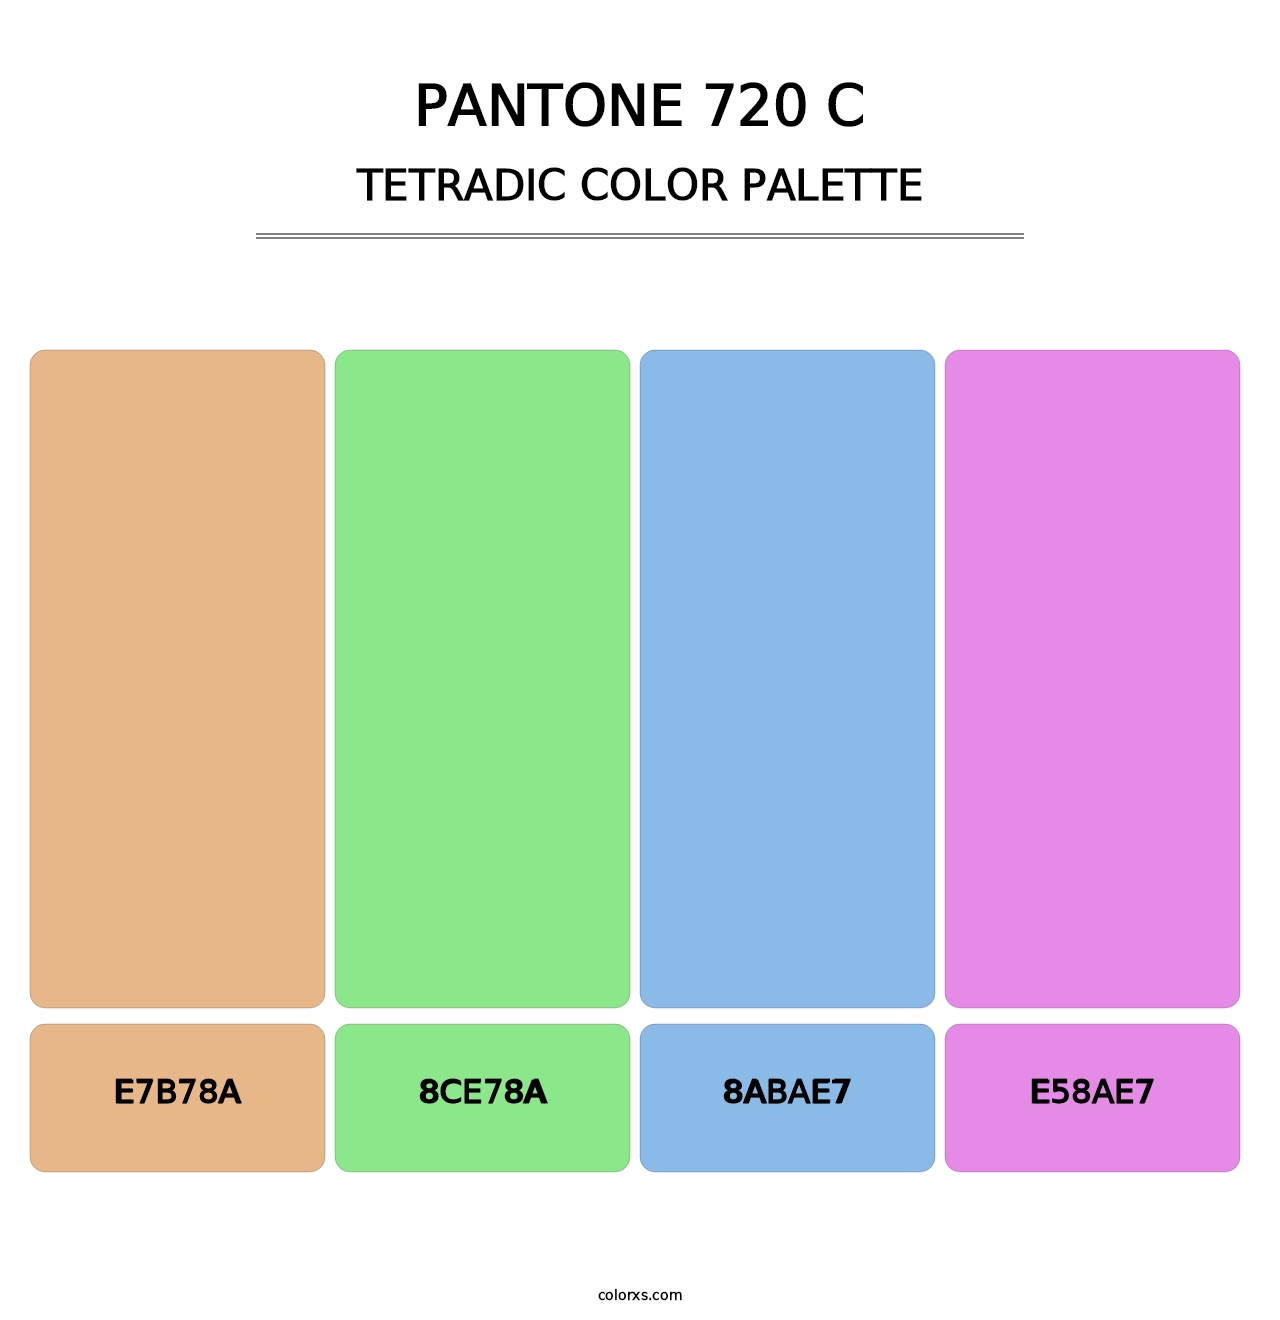 PANTONE 720 C - Tetradic Color Palette